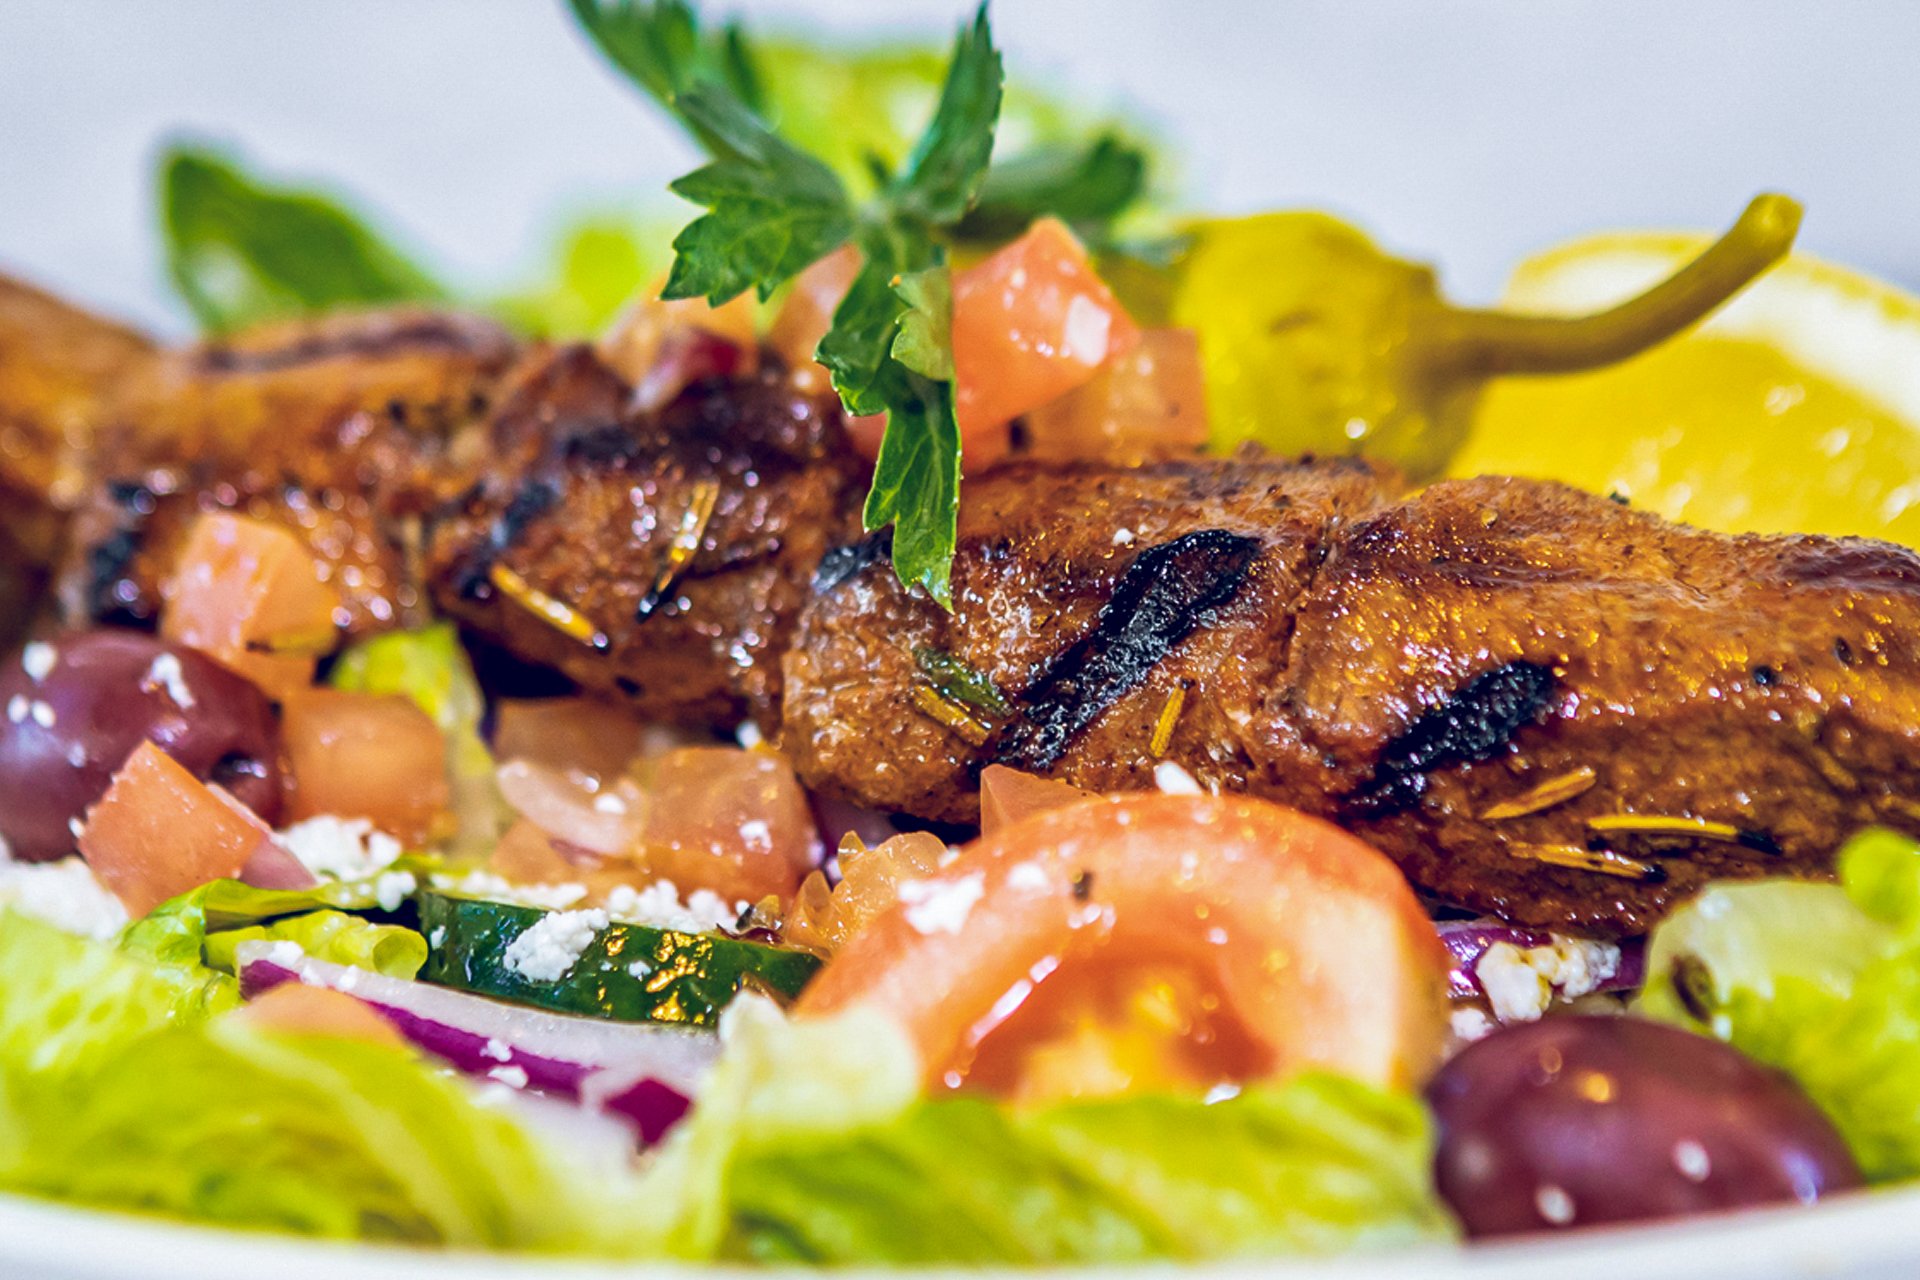 5 Reasons to Love Greek Food Near Me - The Great Greek Mediterranean Grill, Greek and Mediterranean Food